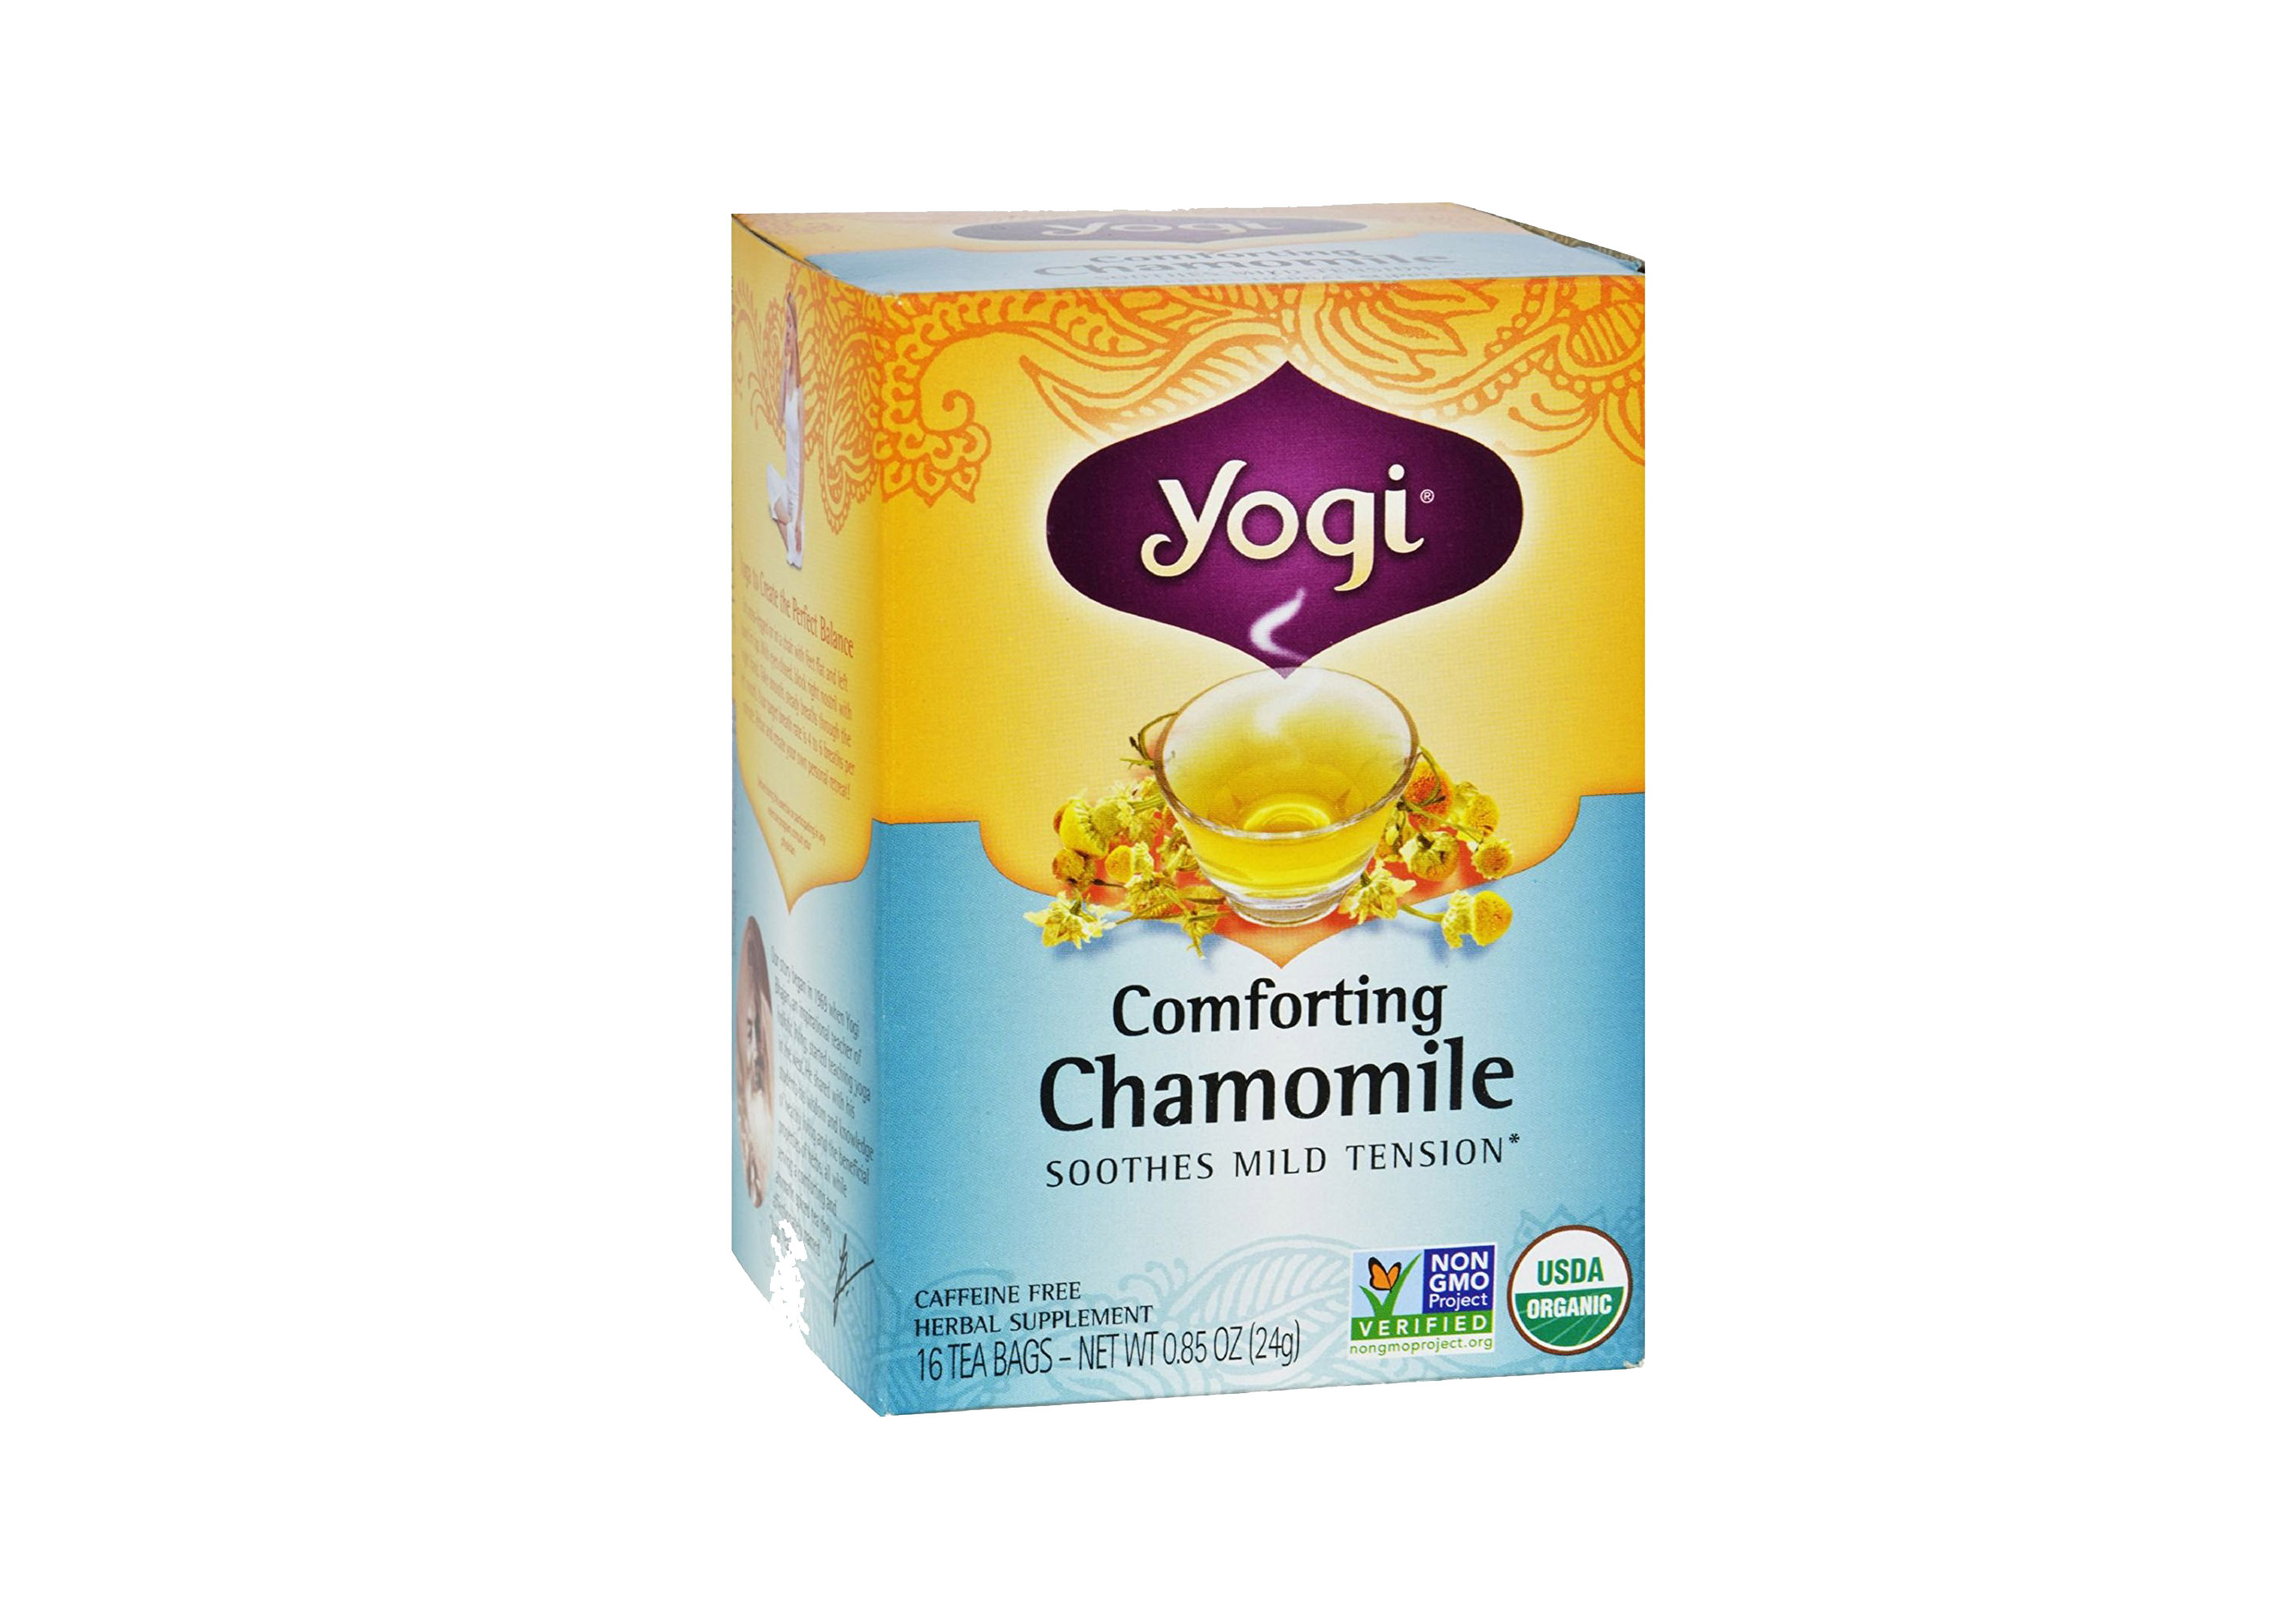 Yogi Chamomile Tea